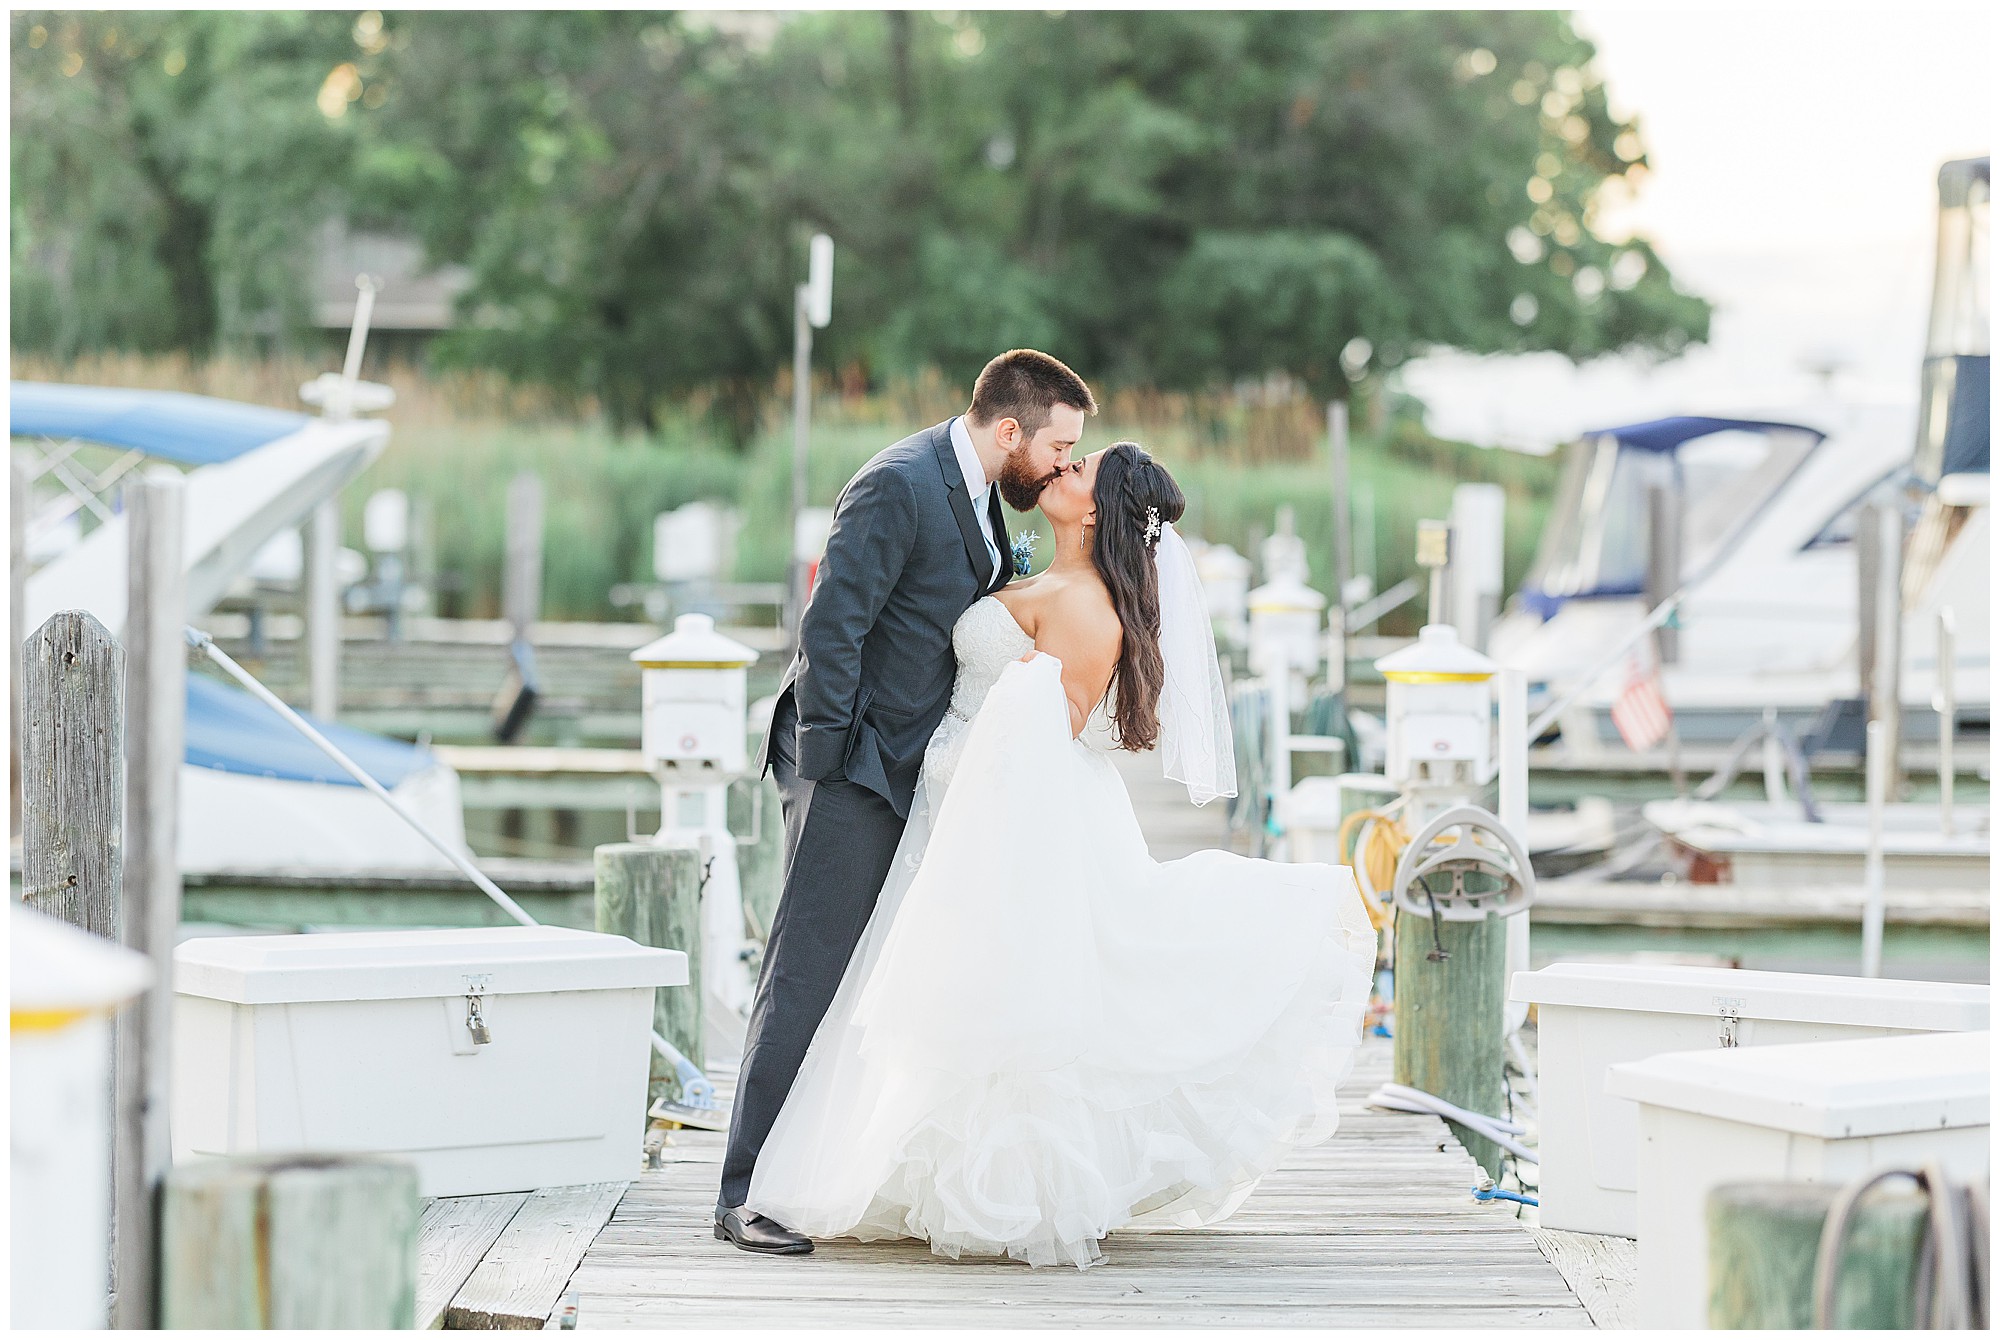 eastern yacht club wedding bride groom sunset portraits baltimore maryland waterfront pier docks